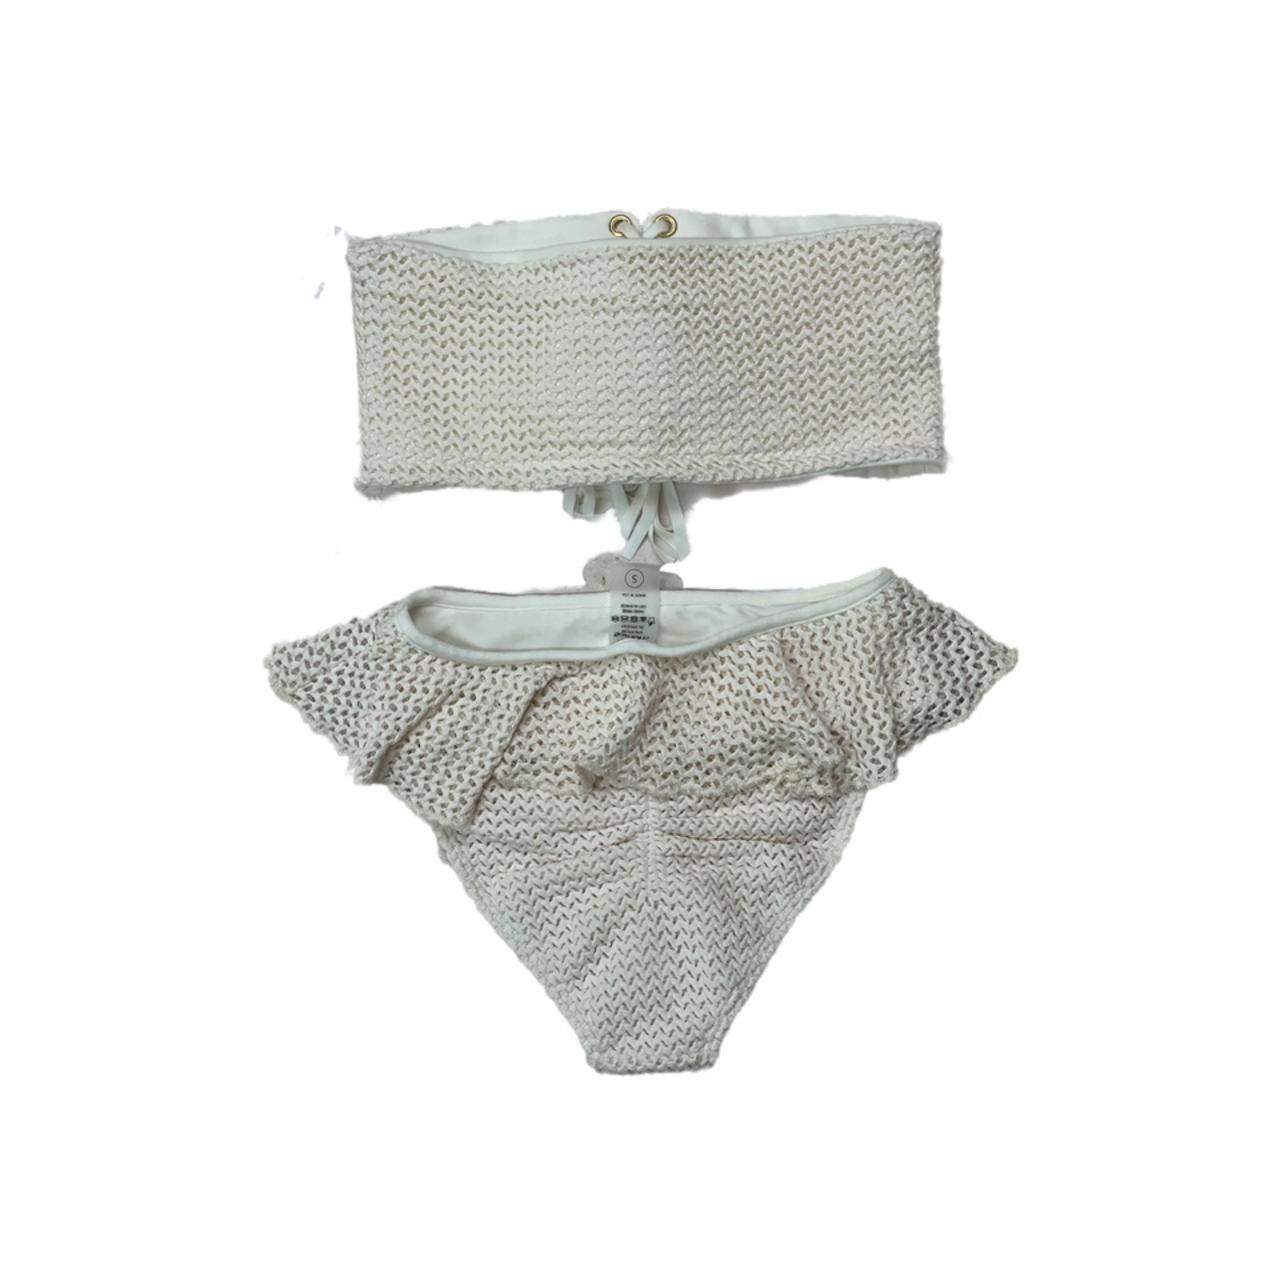 Product Image 2 - Montce white woven bandeau bikini

Size